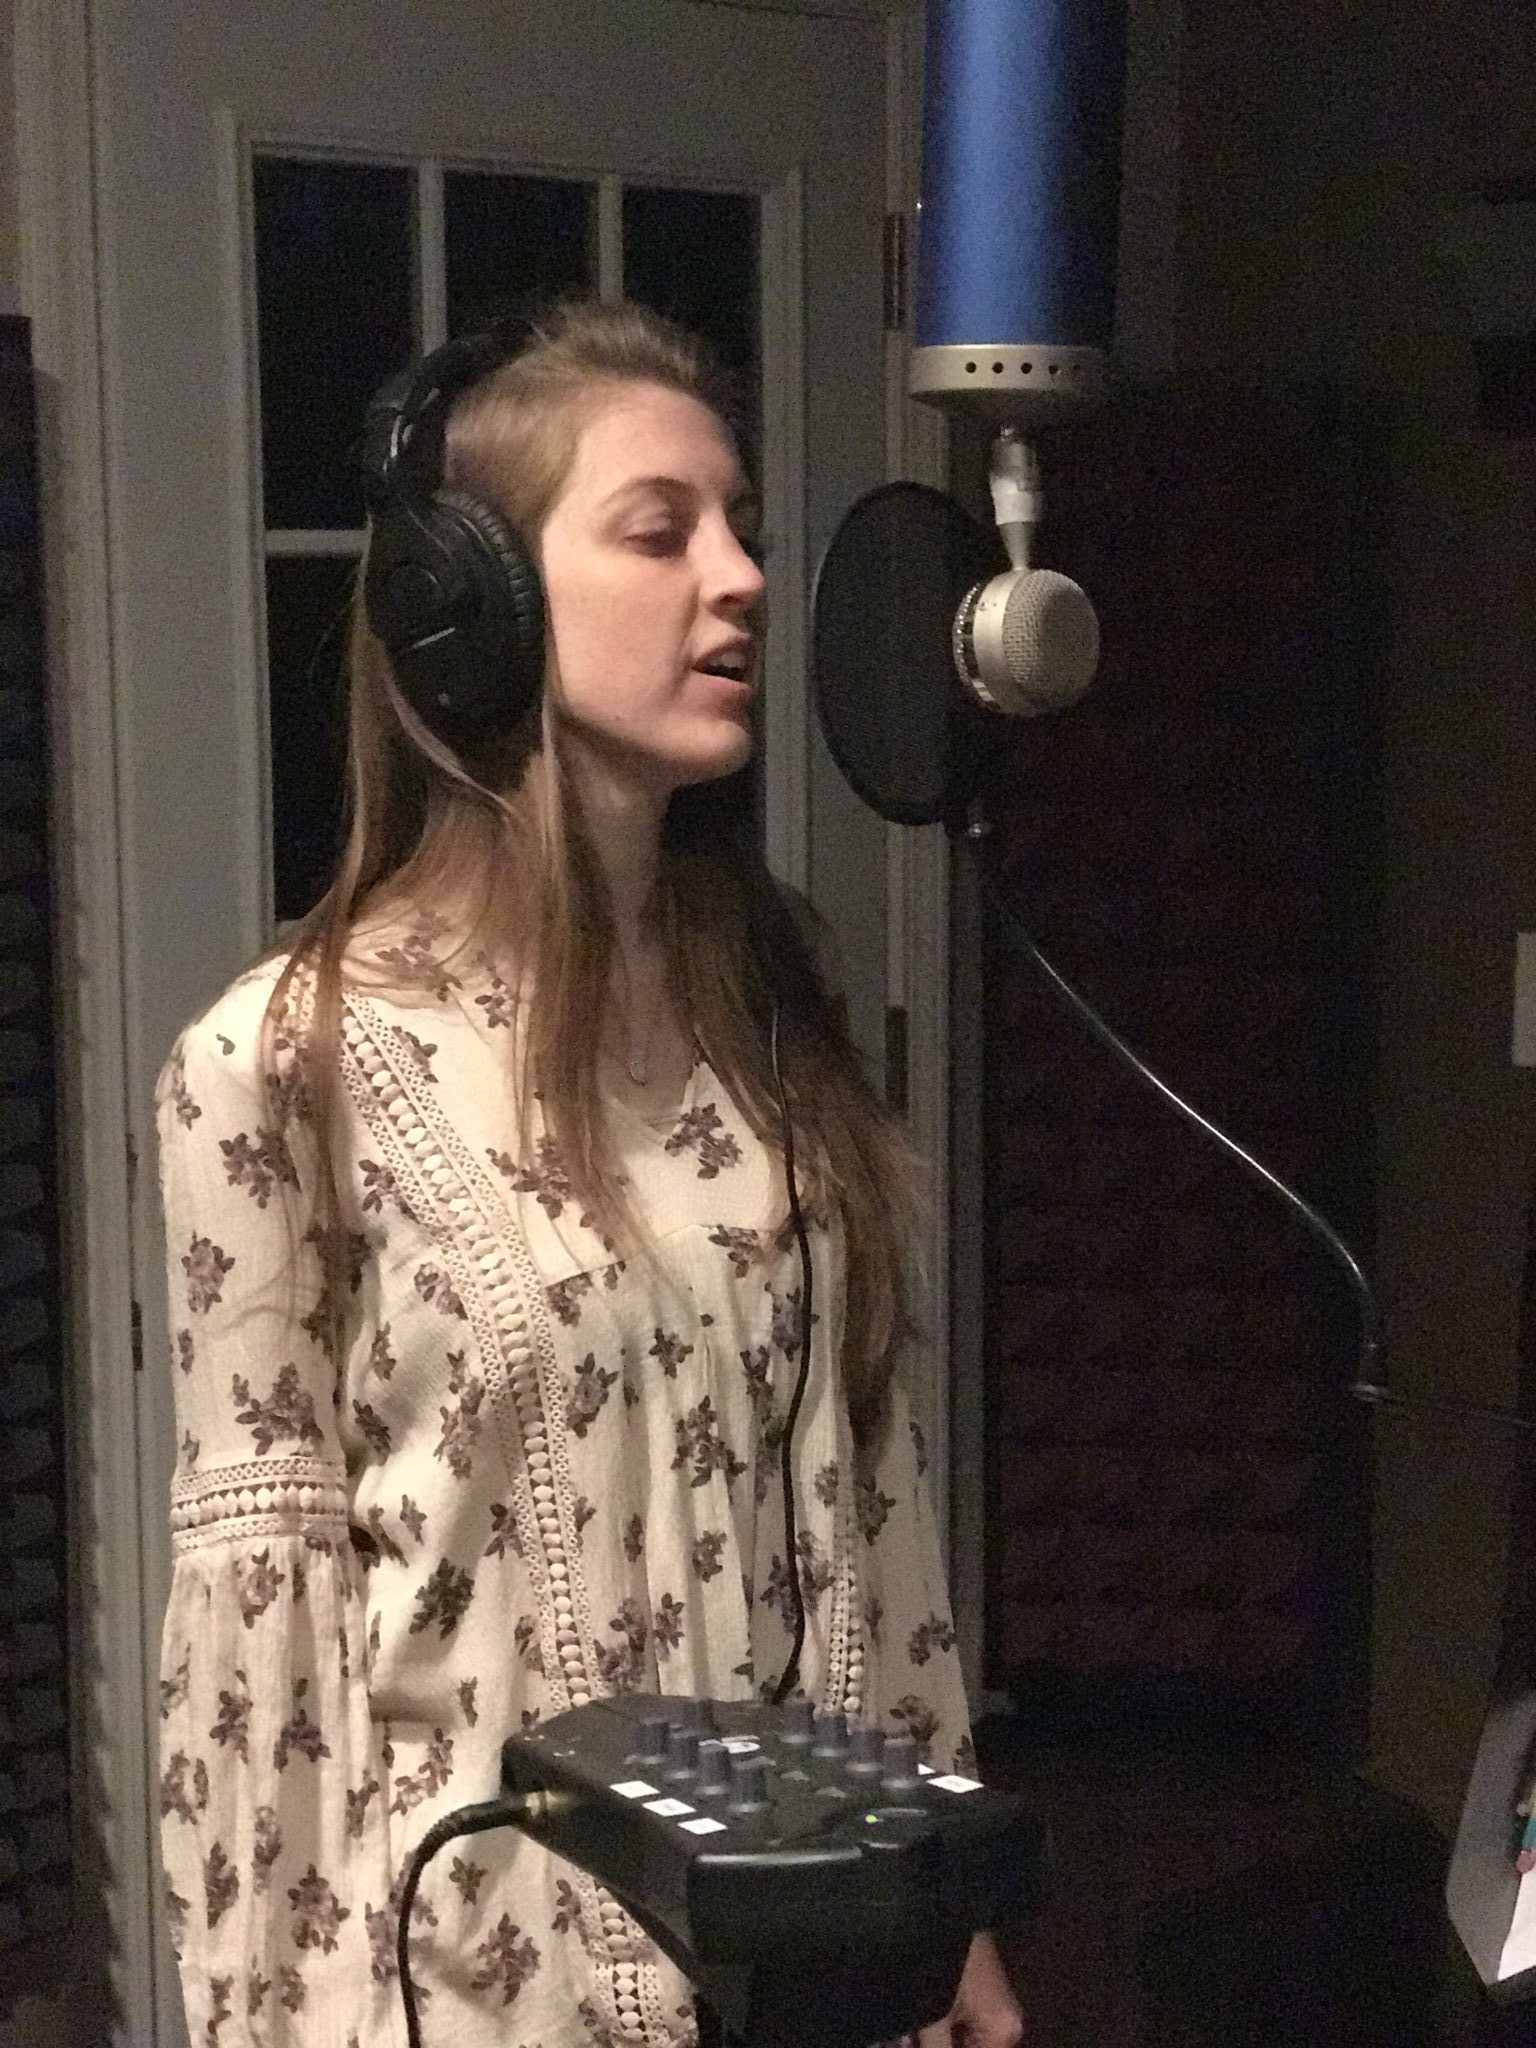 Katie recording the vocals for California